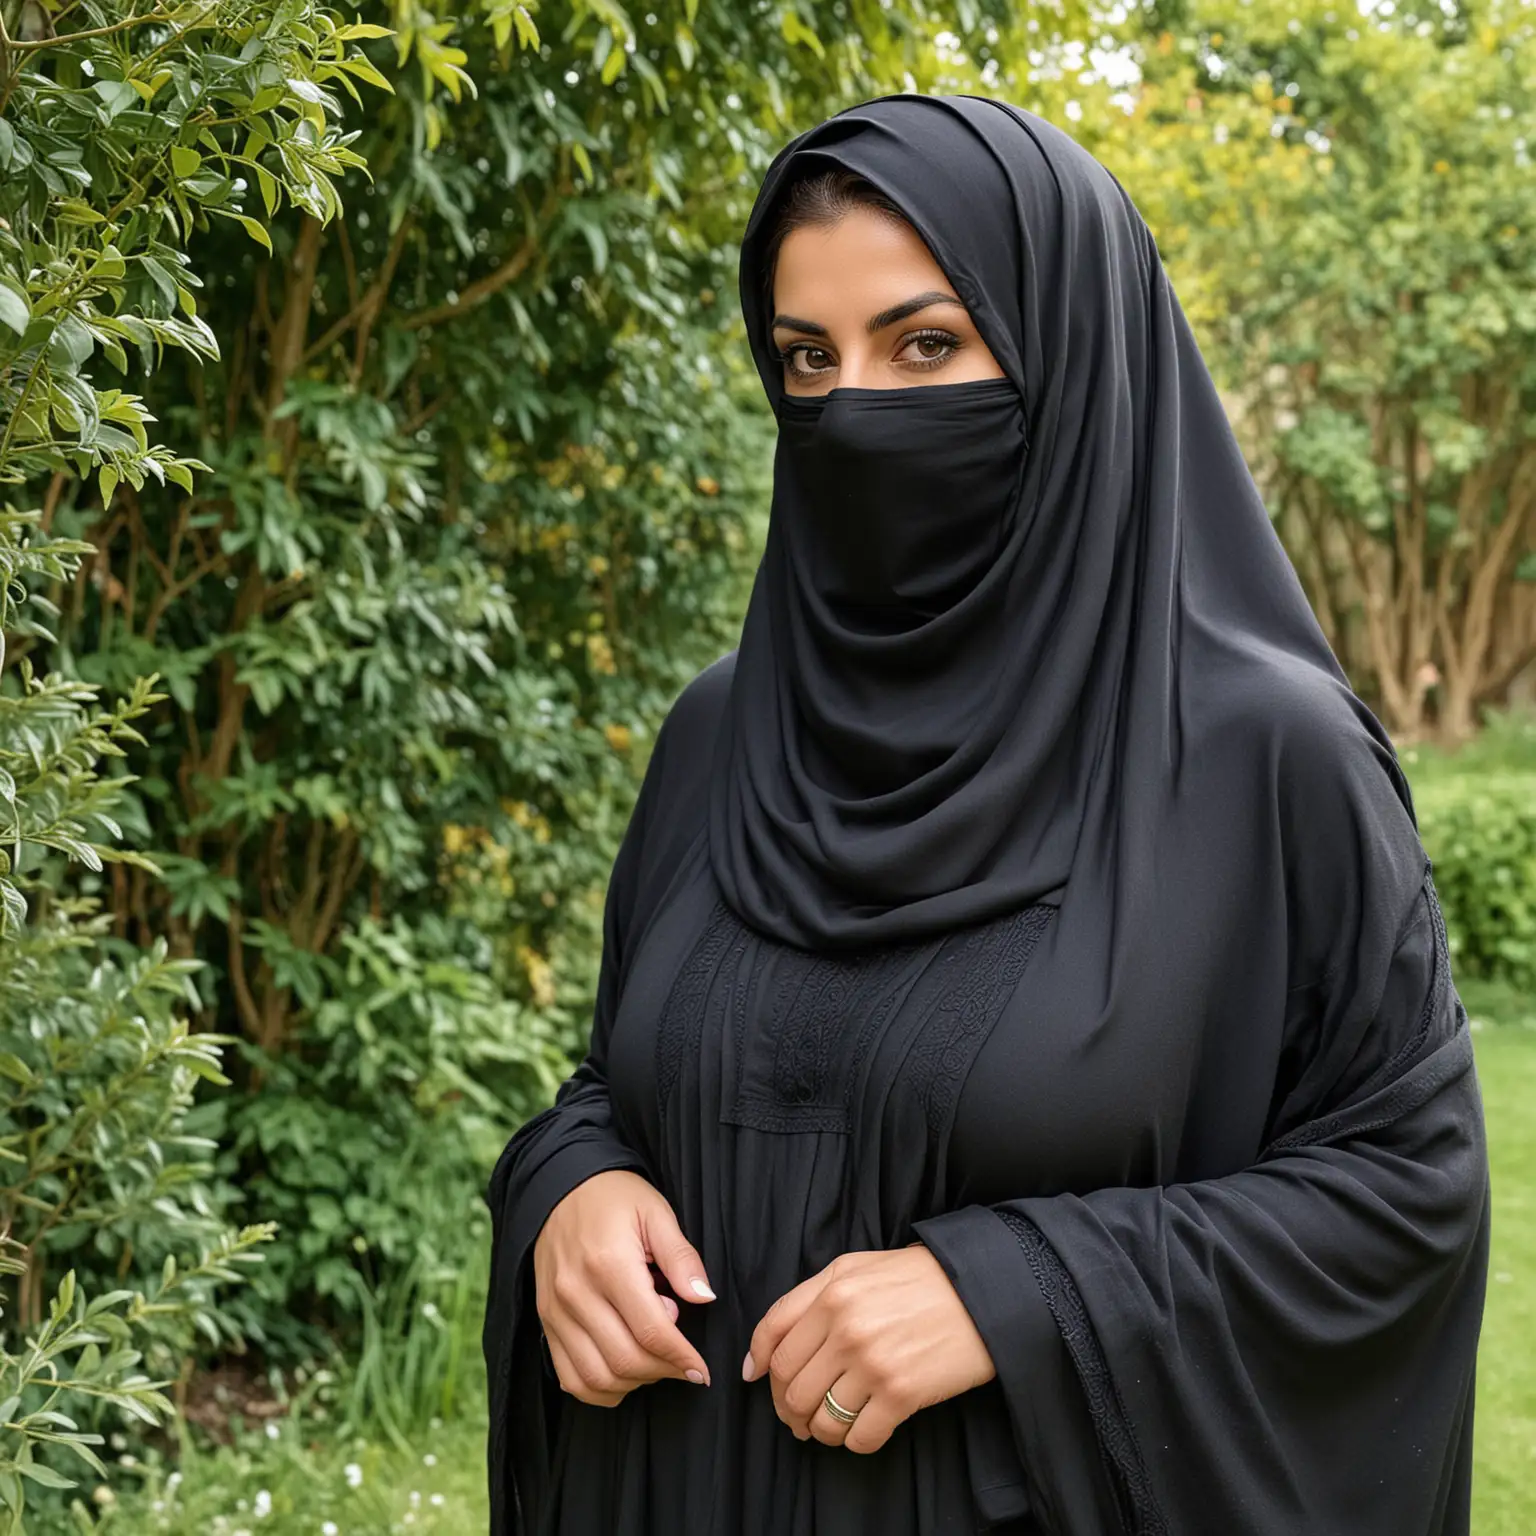 Elegant Iranian Woman in Garden Concealed Beauty